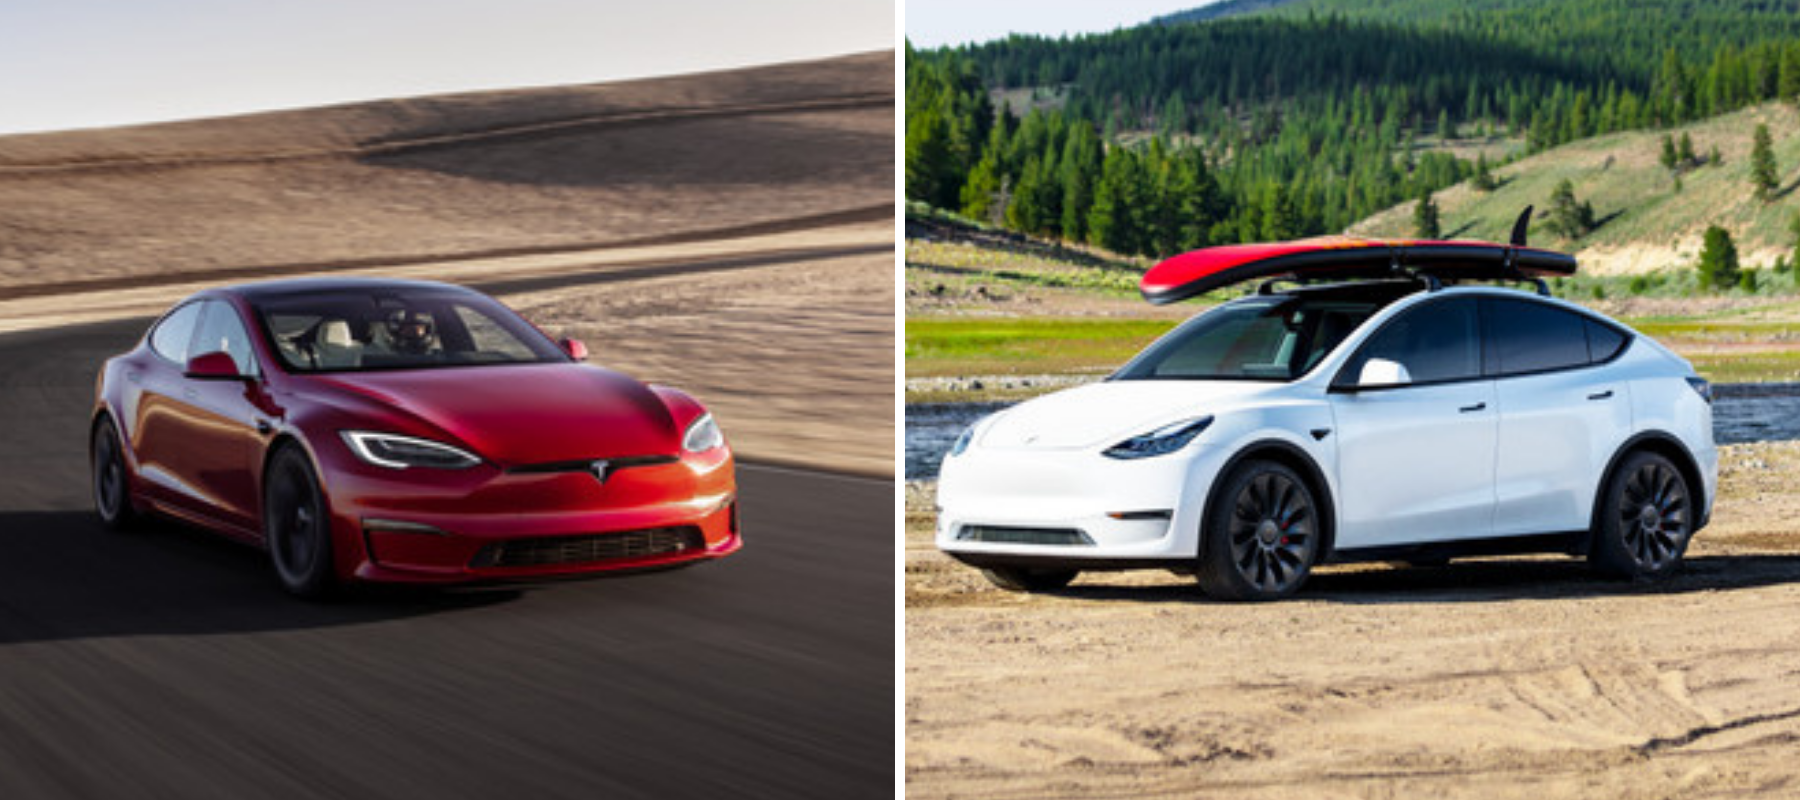 The Tesla Model S electric luxury midsize sedan and Tesla Model Y luxury electric compact SUV